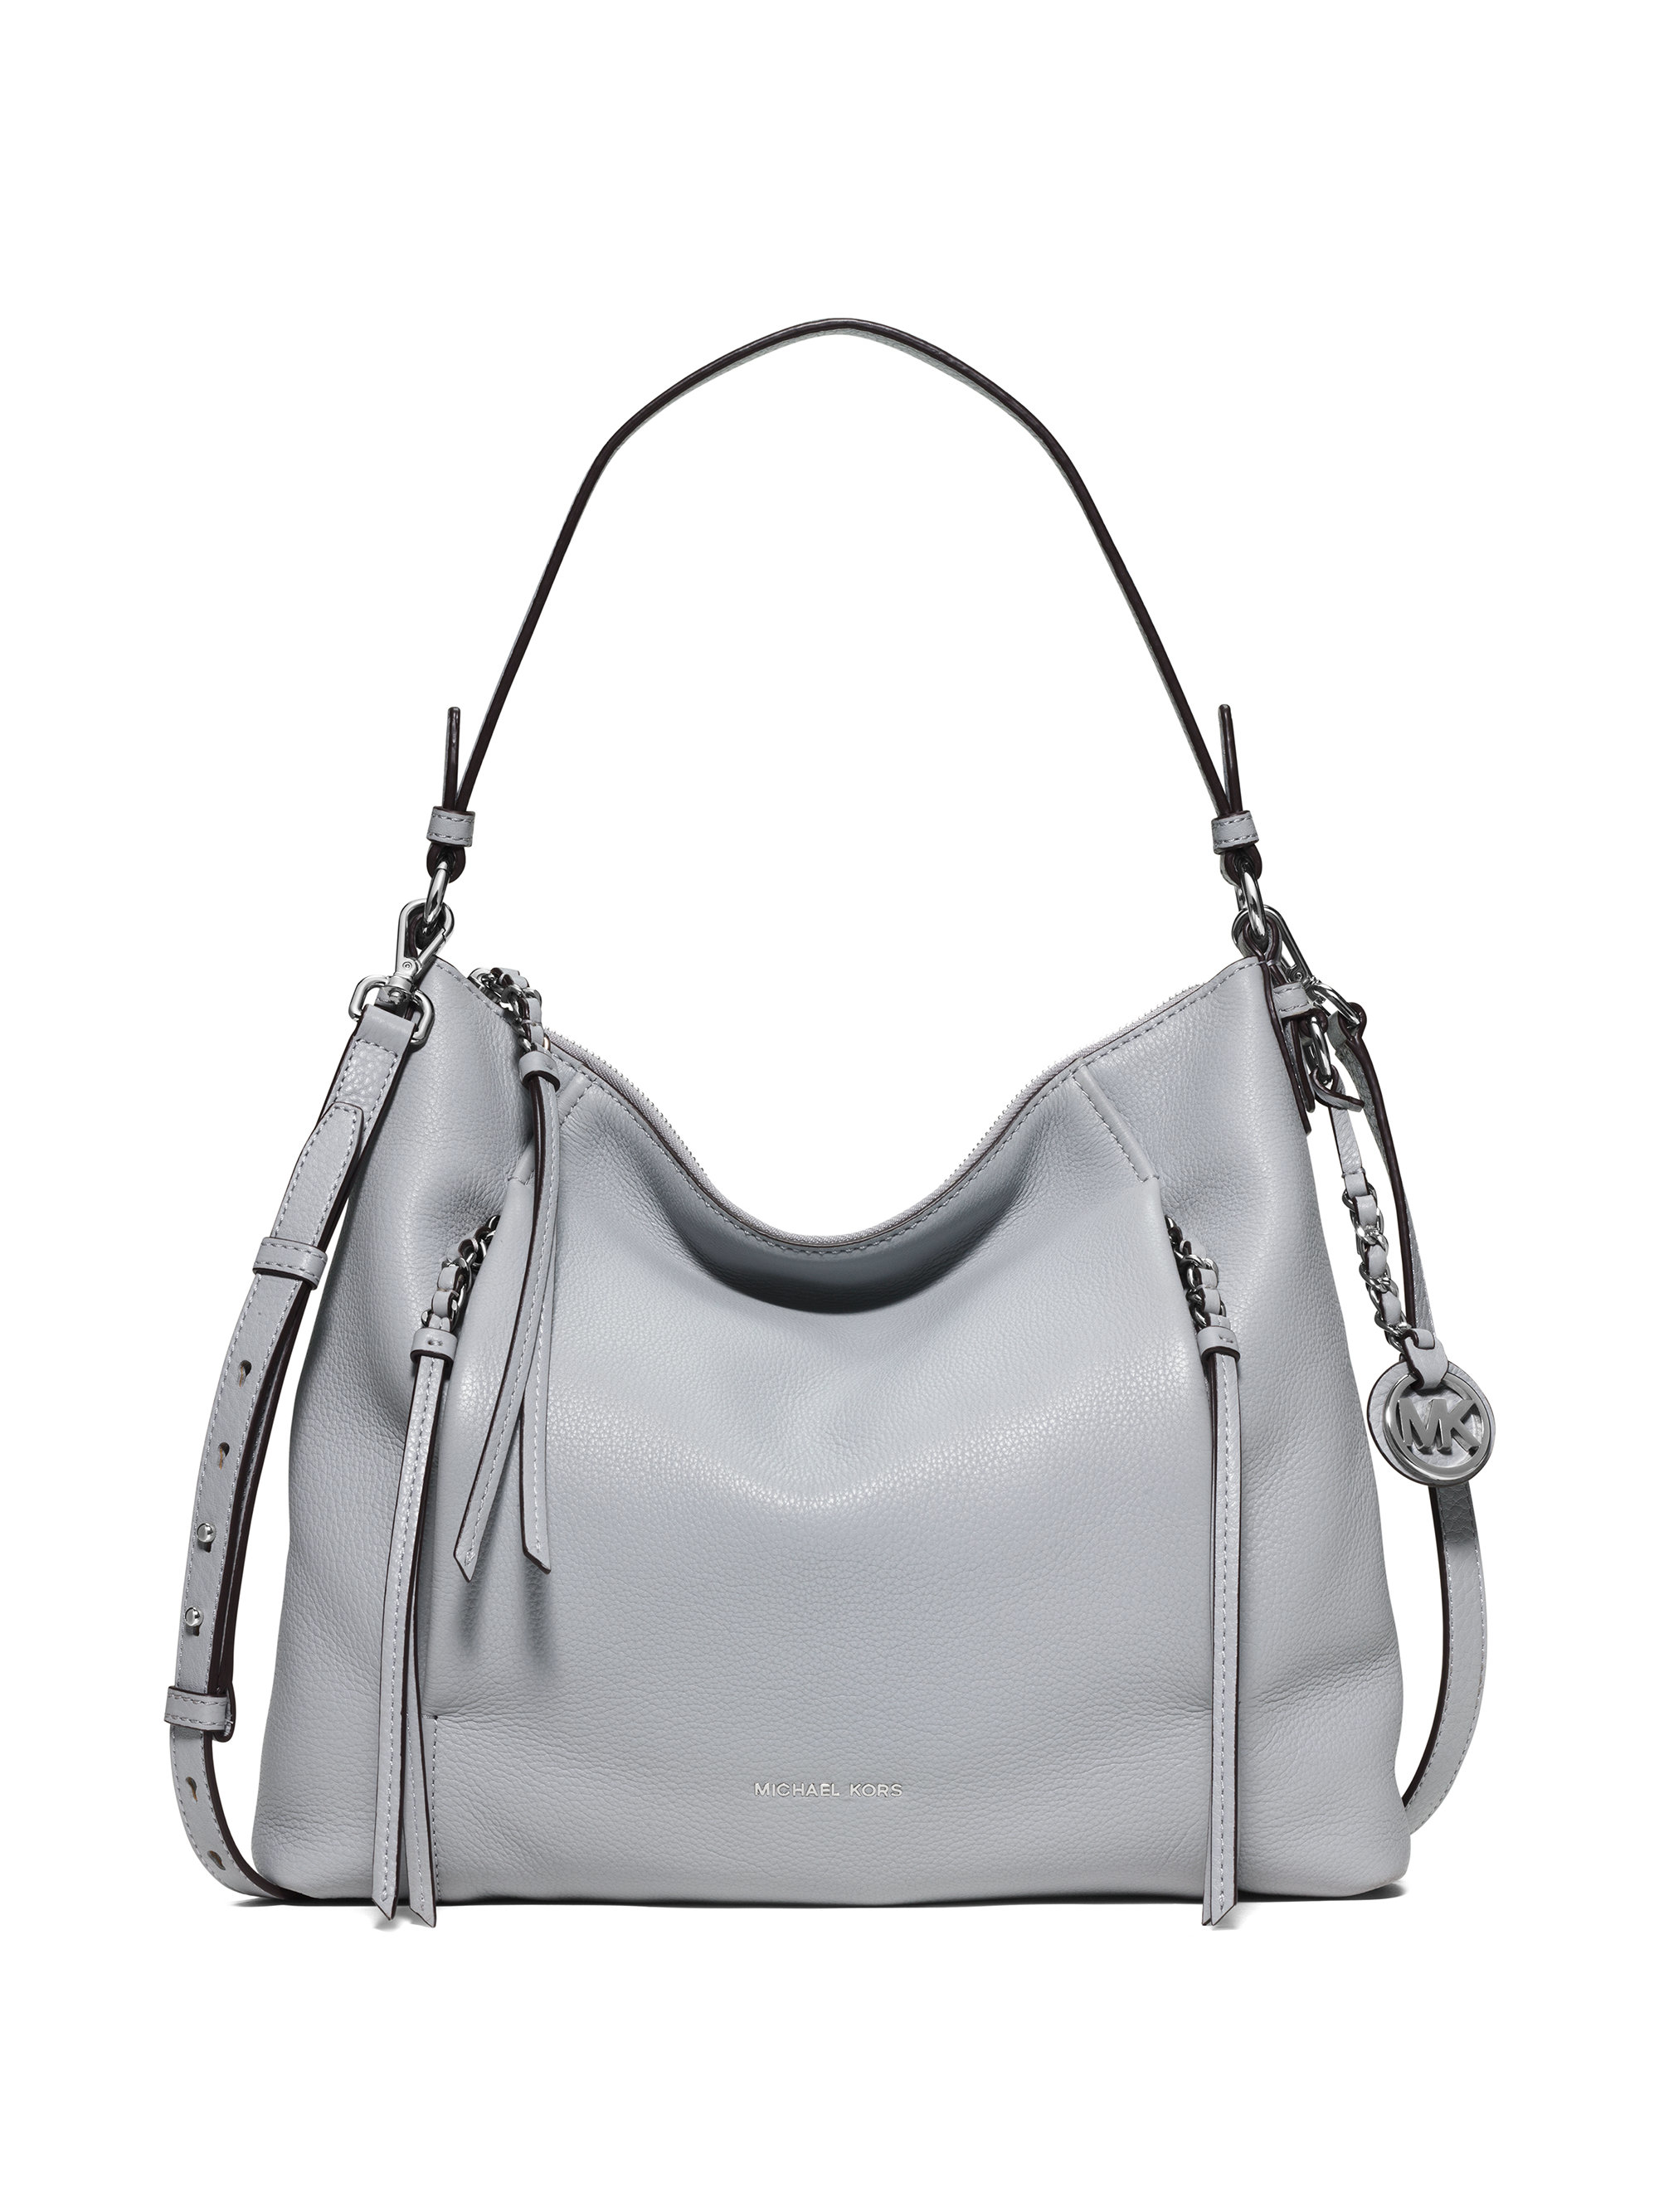 spray Brandy Celebrity MICHAEL Michael Kors Corinne Large Leather Shoulder Bag in Gray - Lyst